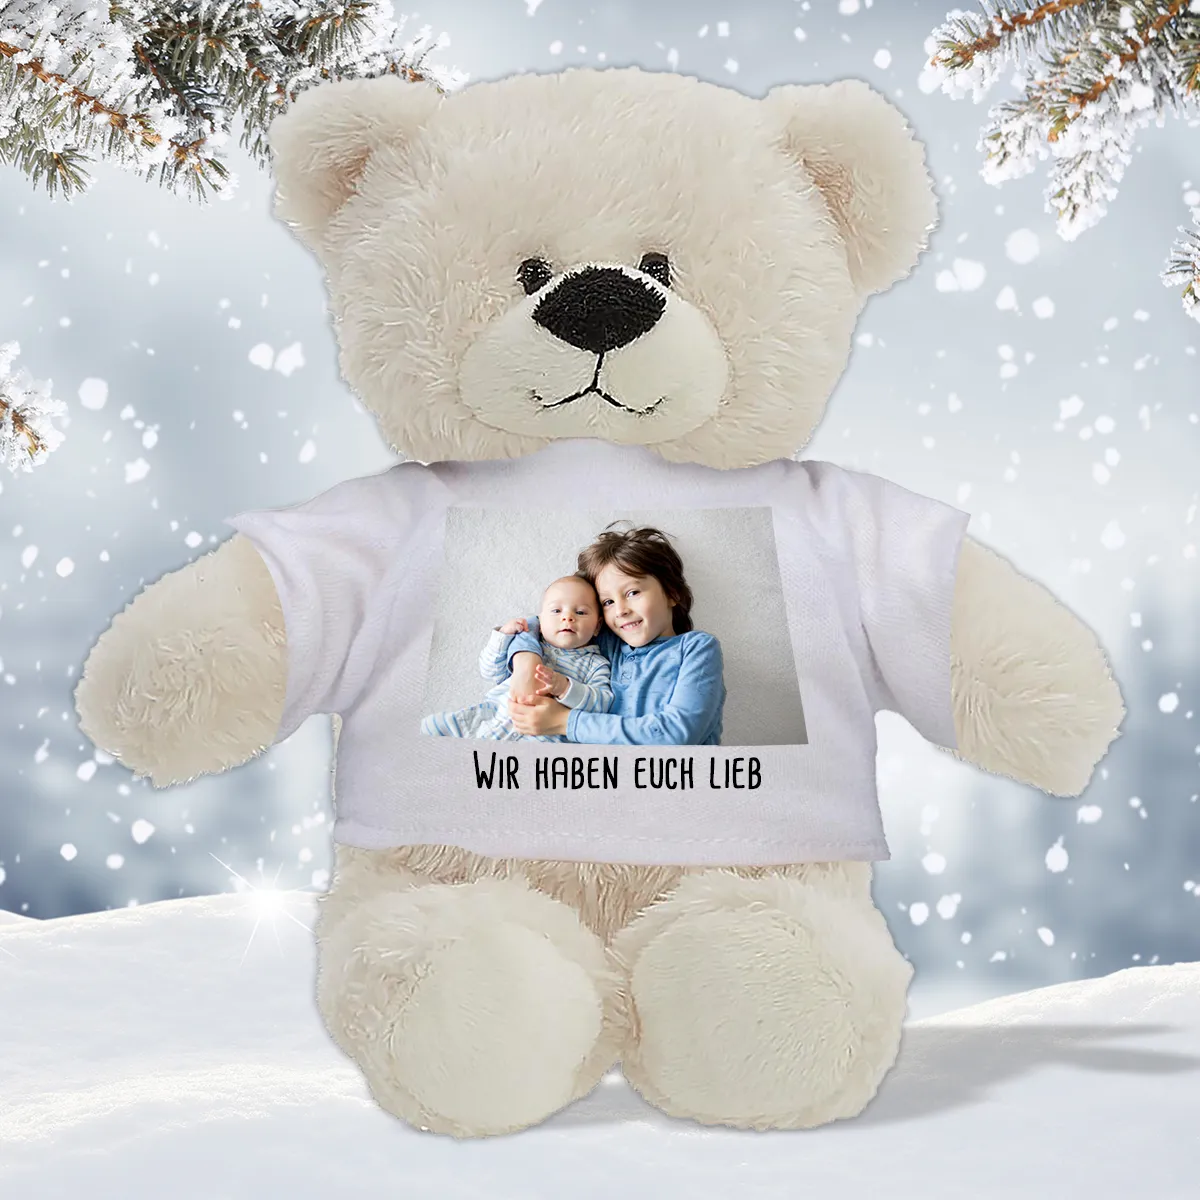 Kuscheltier Eisbär mit bedrucktem T-Shirt